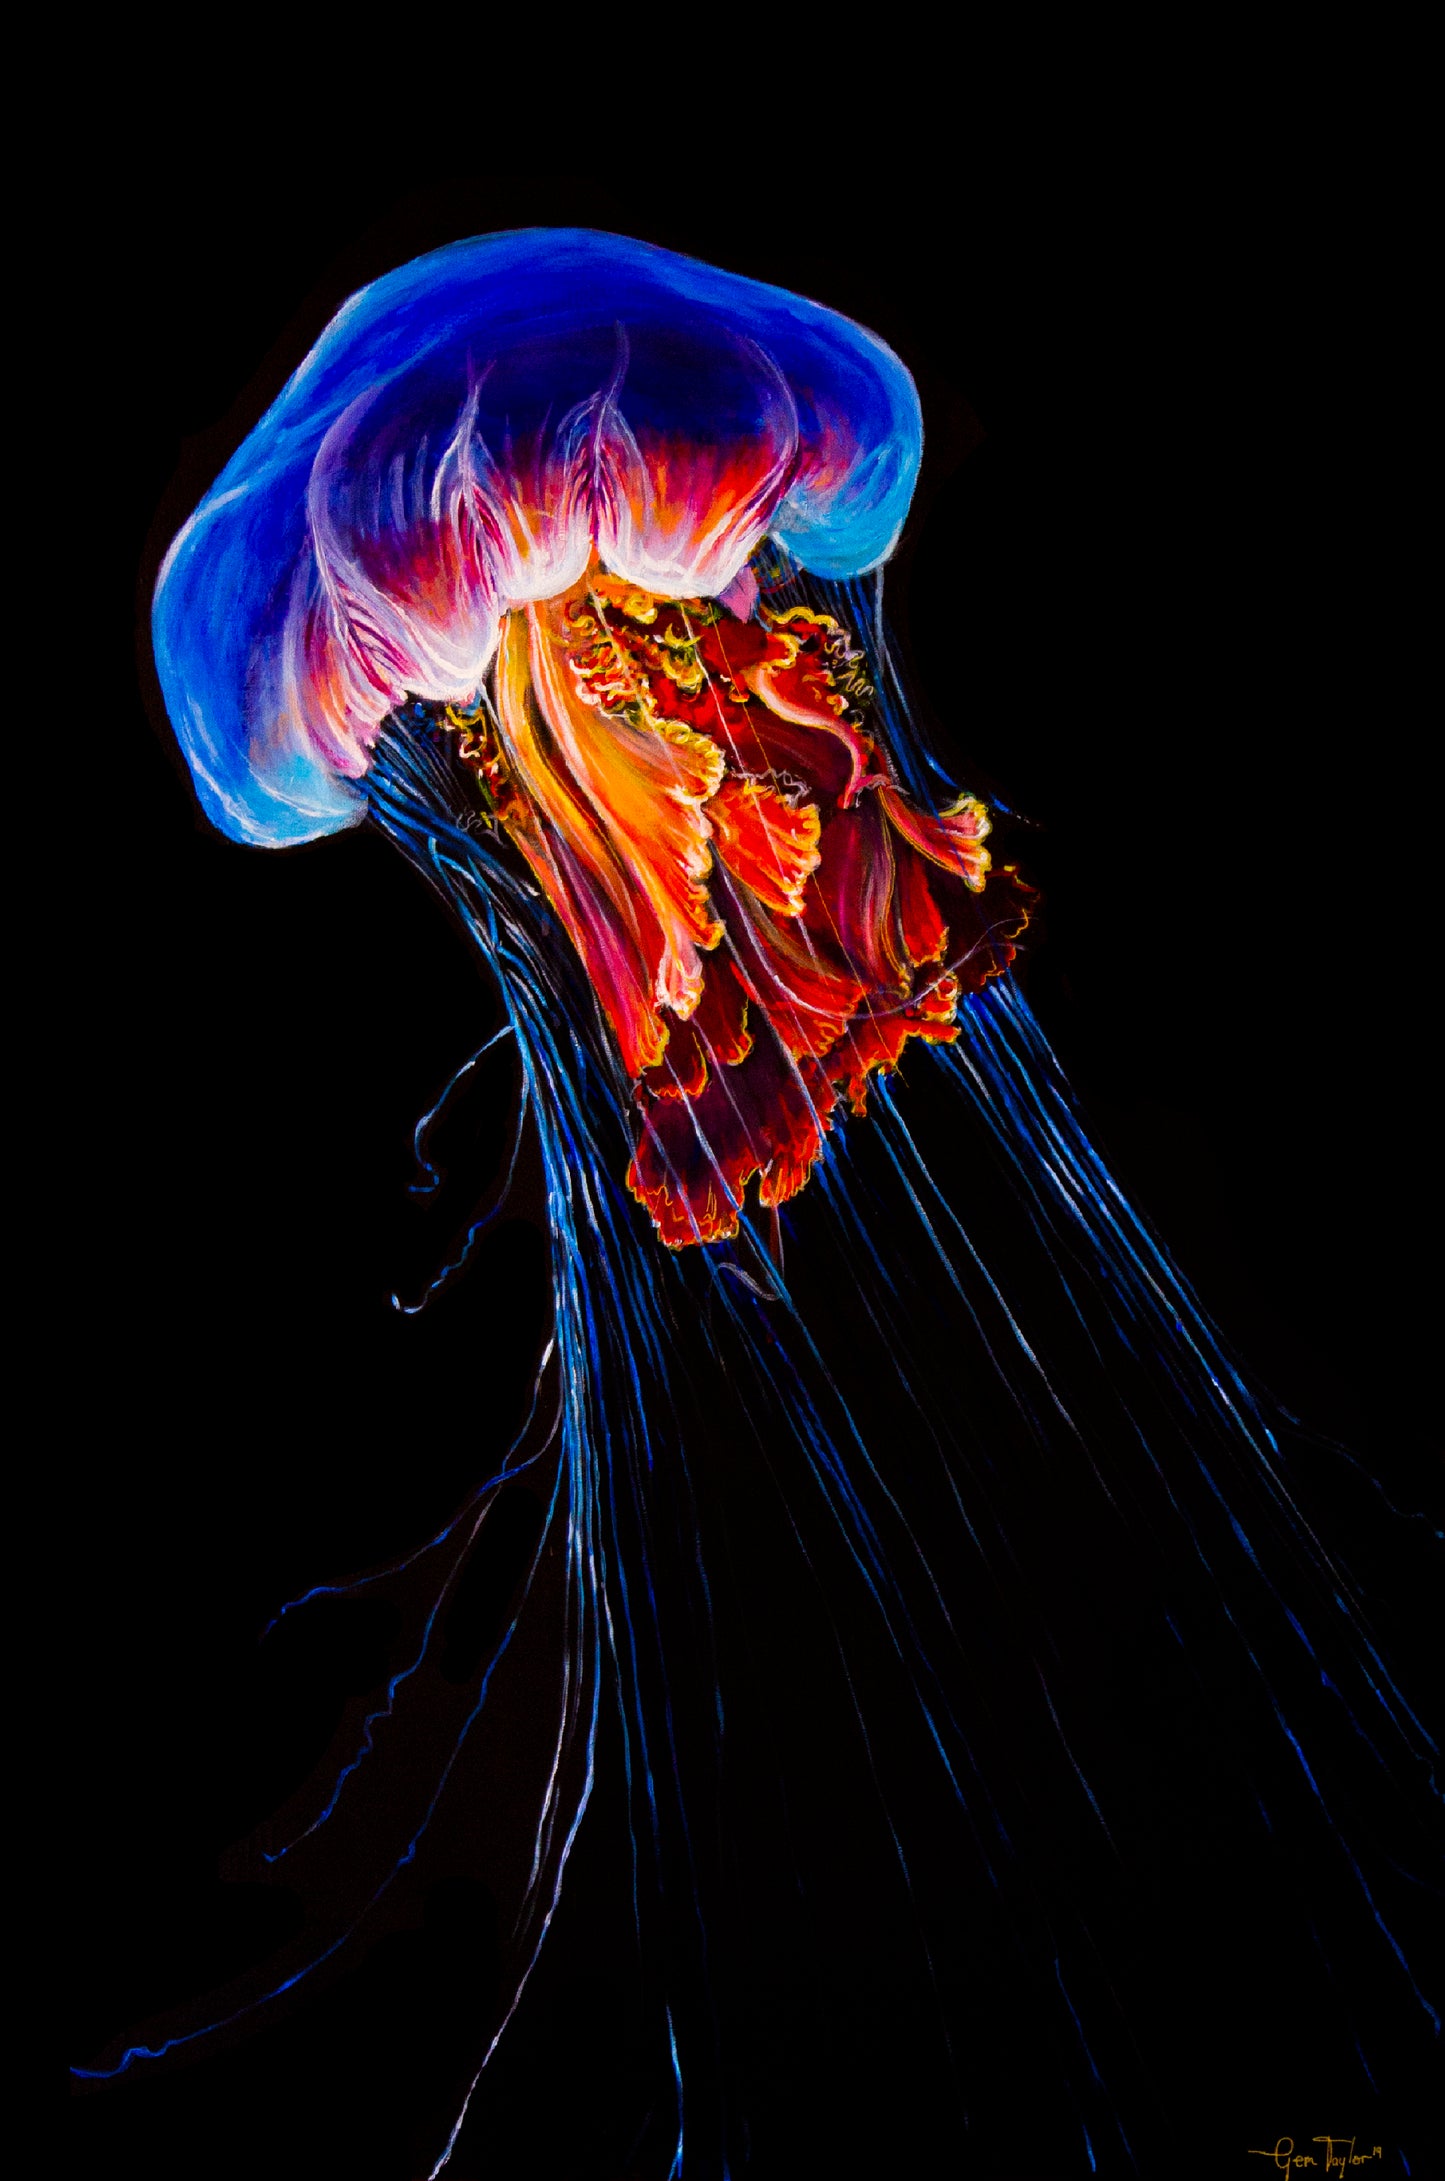 Jellyfish (1/25 Limited Edition)